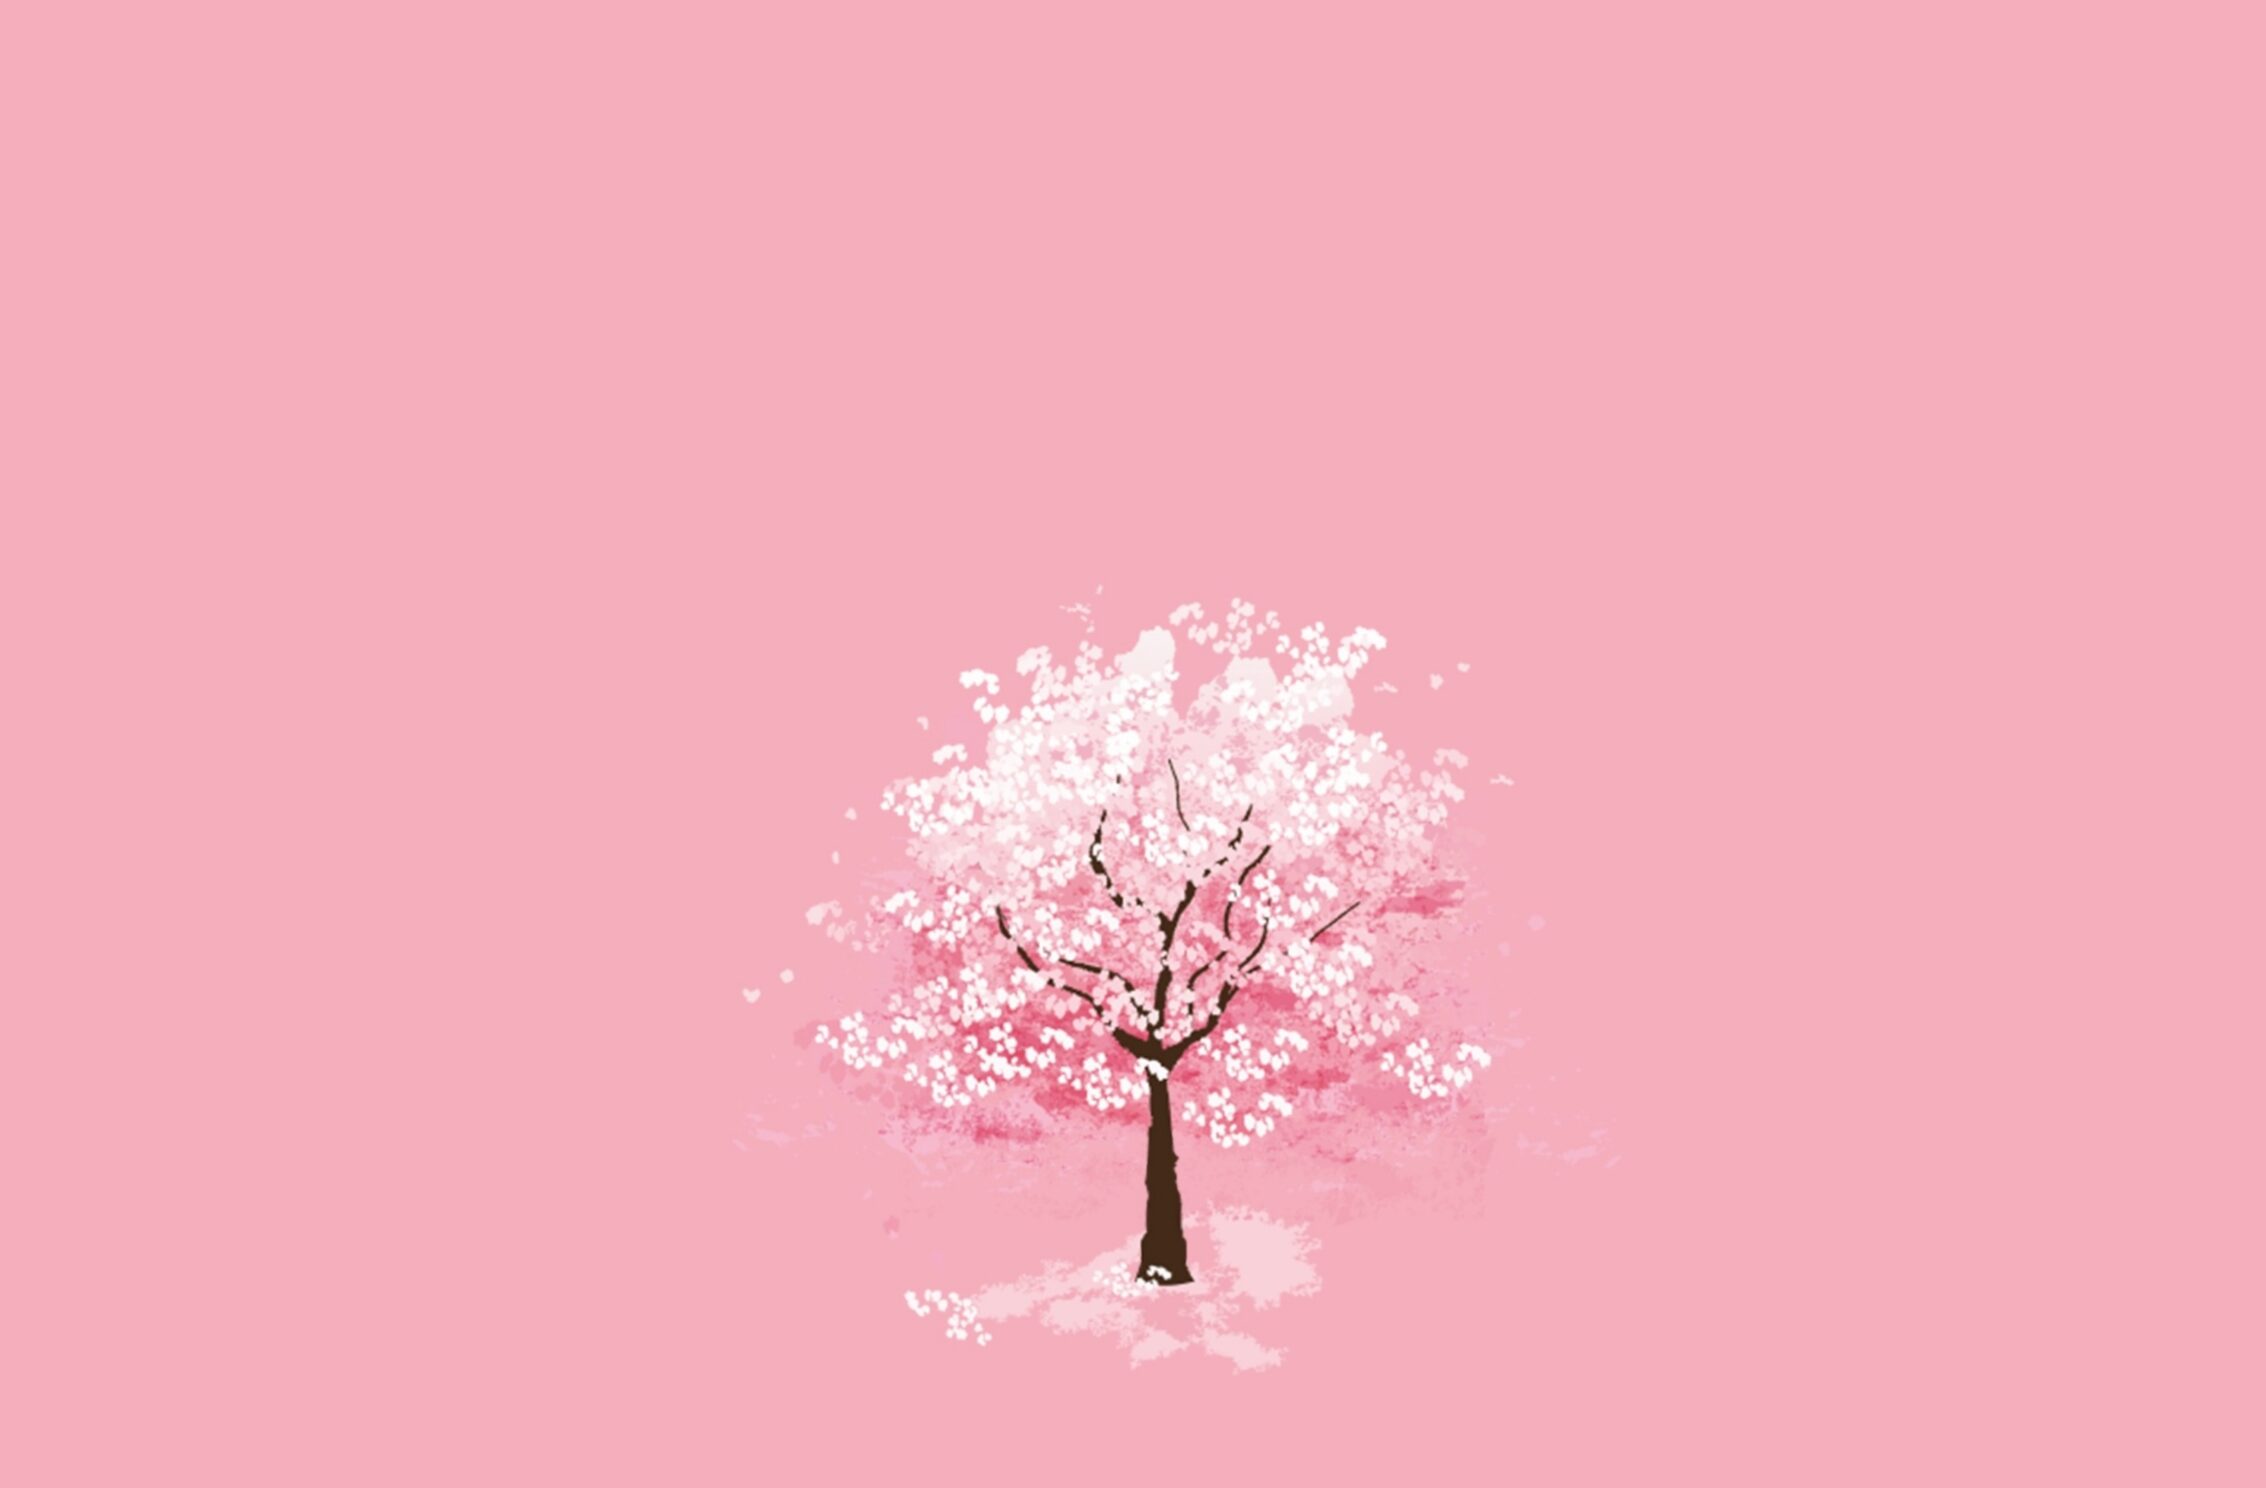 2266x1488 wallpaper Winter Season Tree Pink Background iPad Wallpaper 2266x1488 pixels resolution